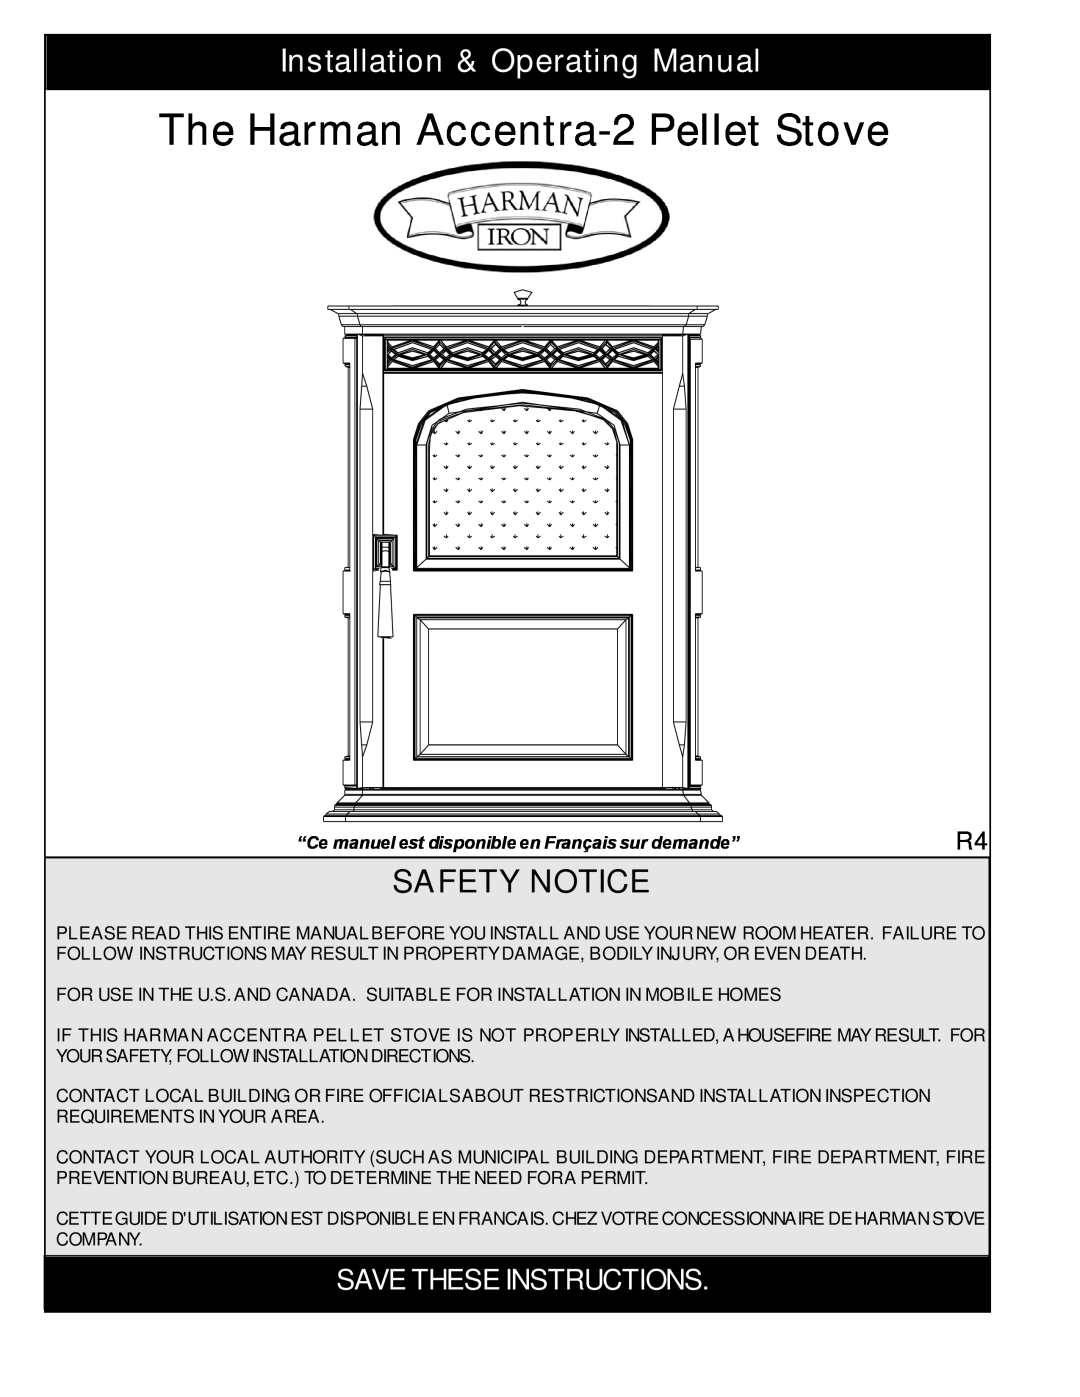 Harman Stove Company manual Installation & Operating Manual, Safety Notice, The Harman Accentra-2 Pellet Stove 